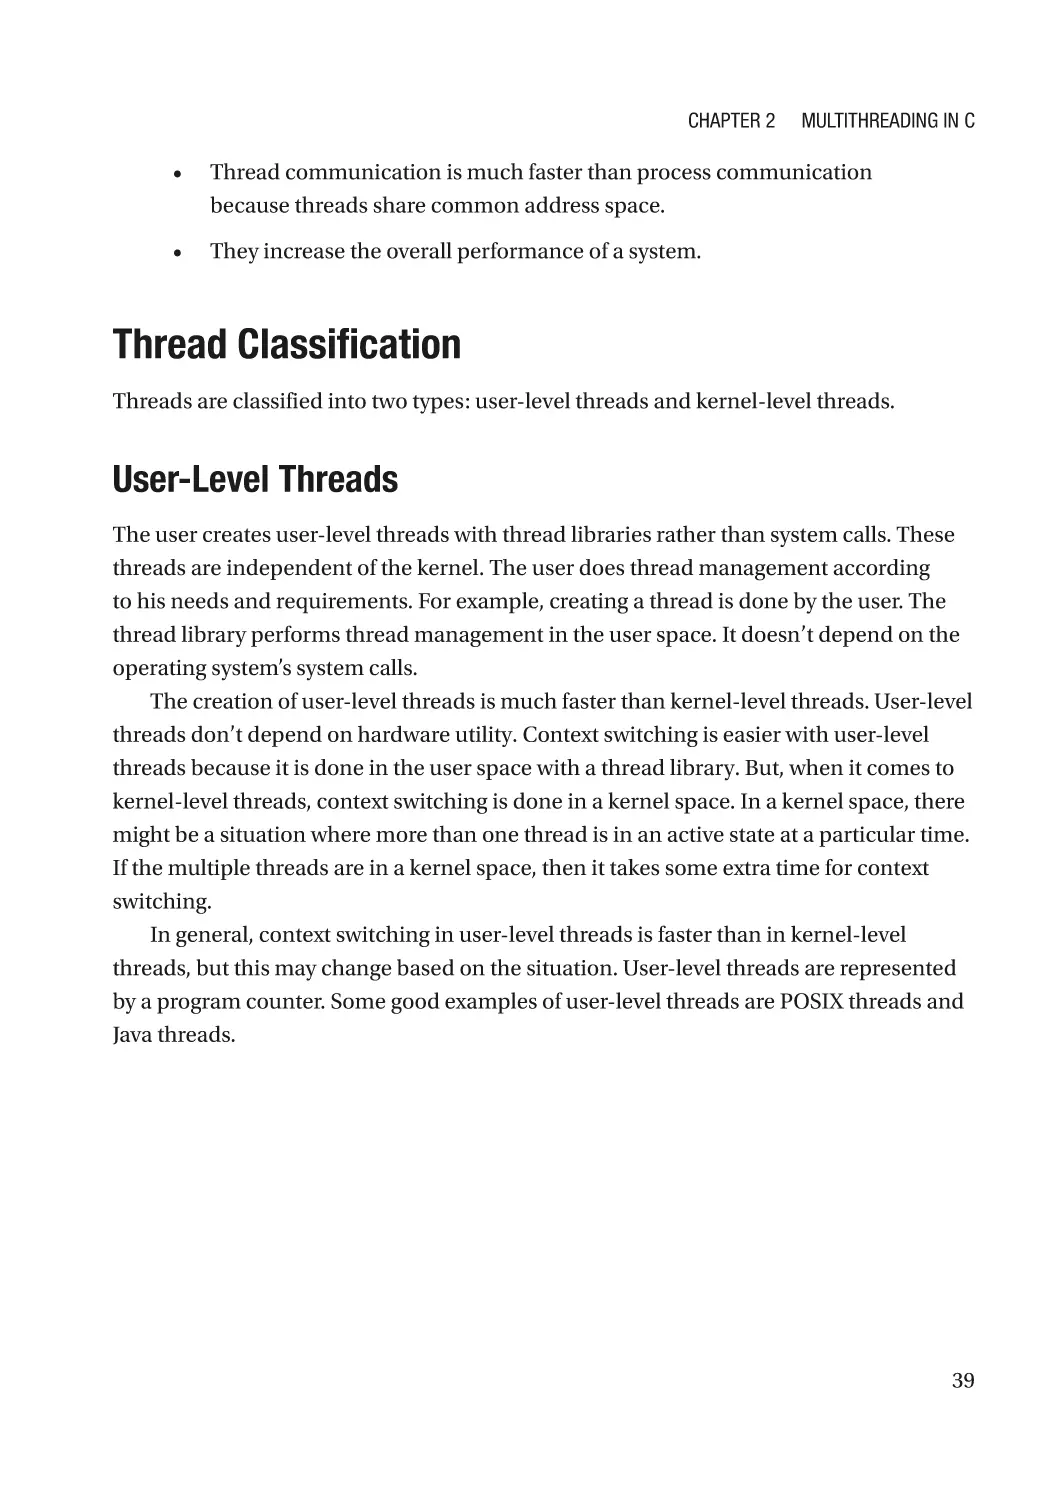 Thread Classification
User-Level Threads